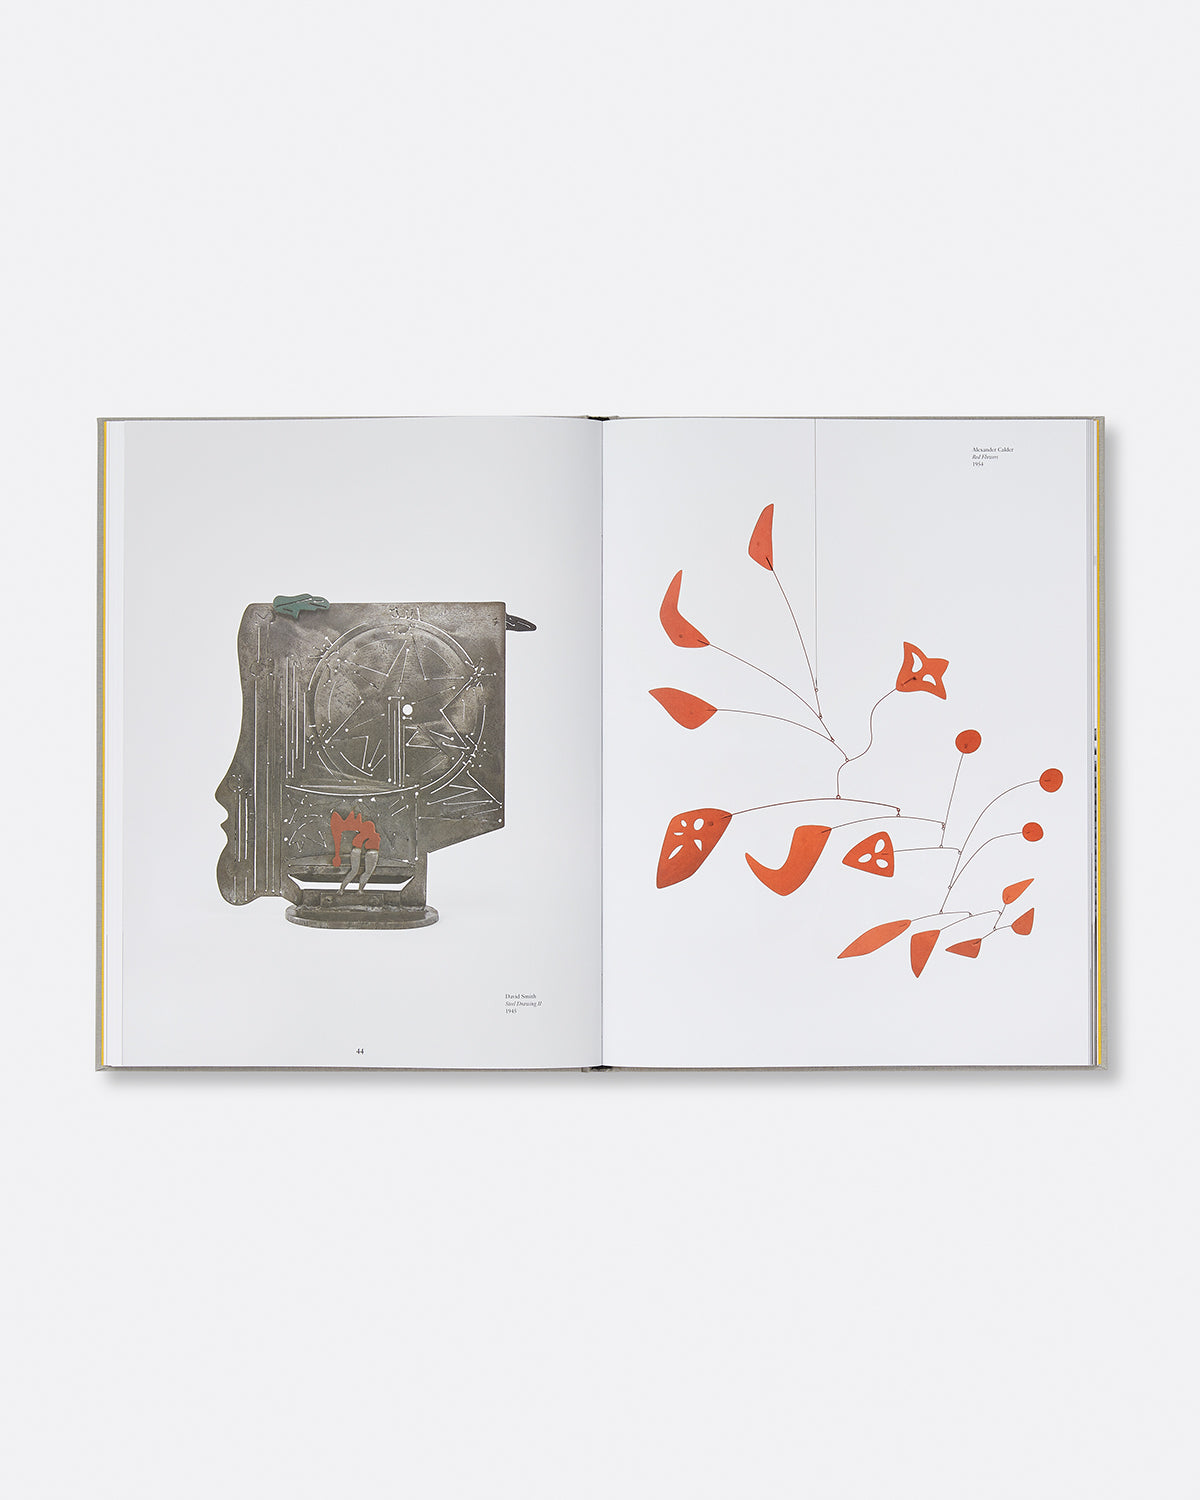 Alexander Calder and David Smith Default Title